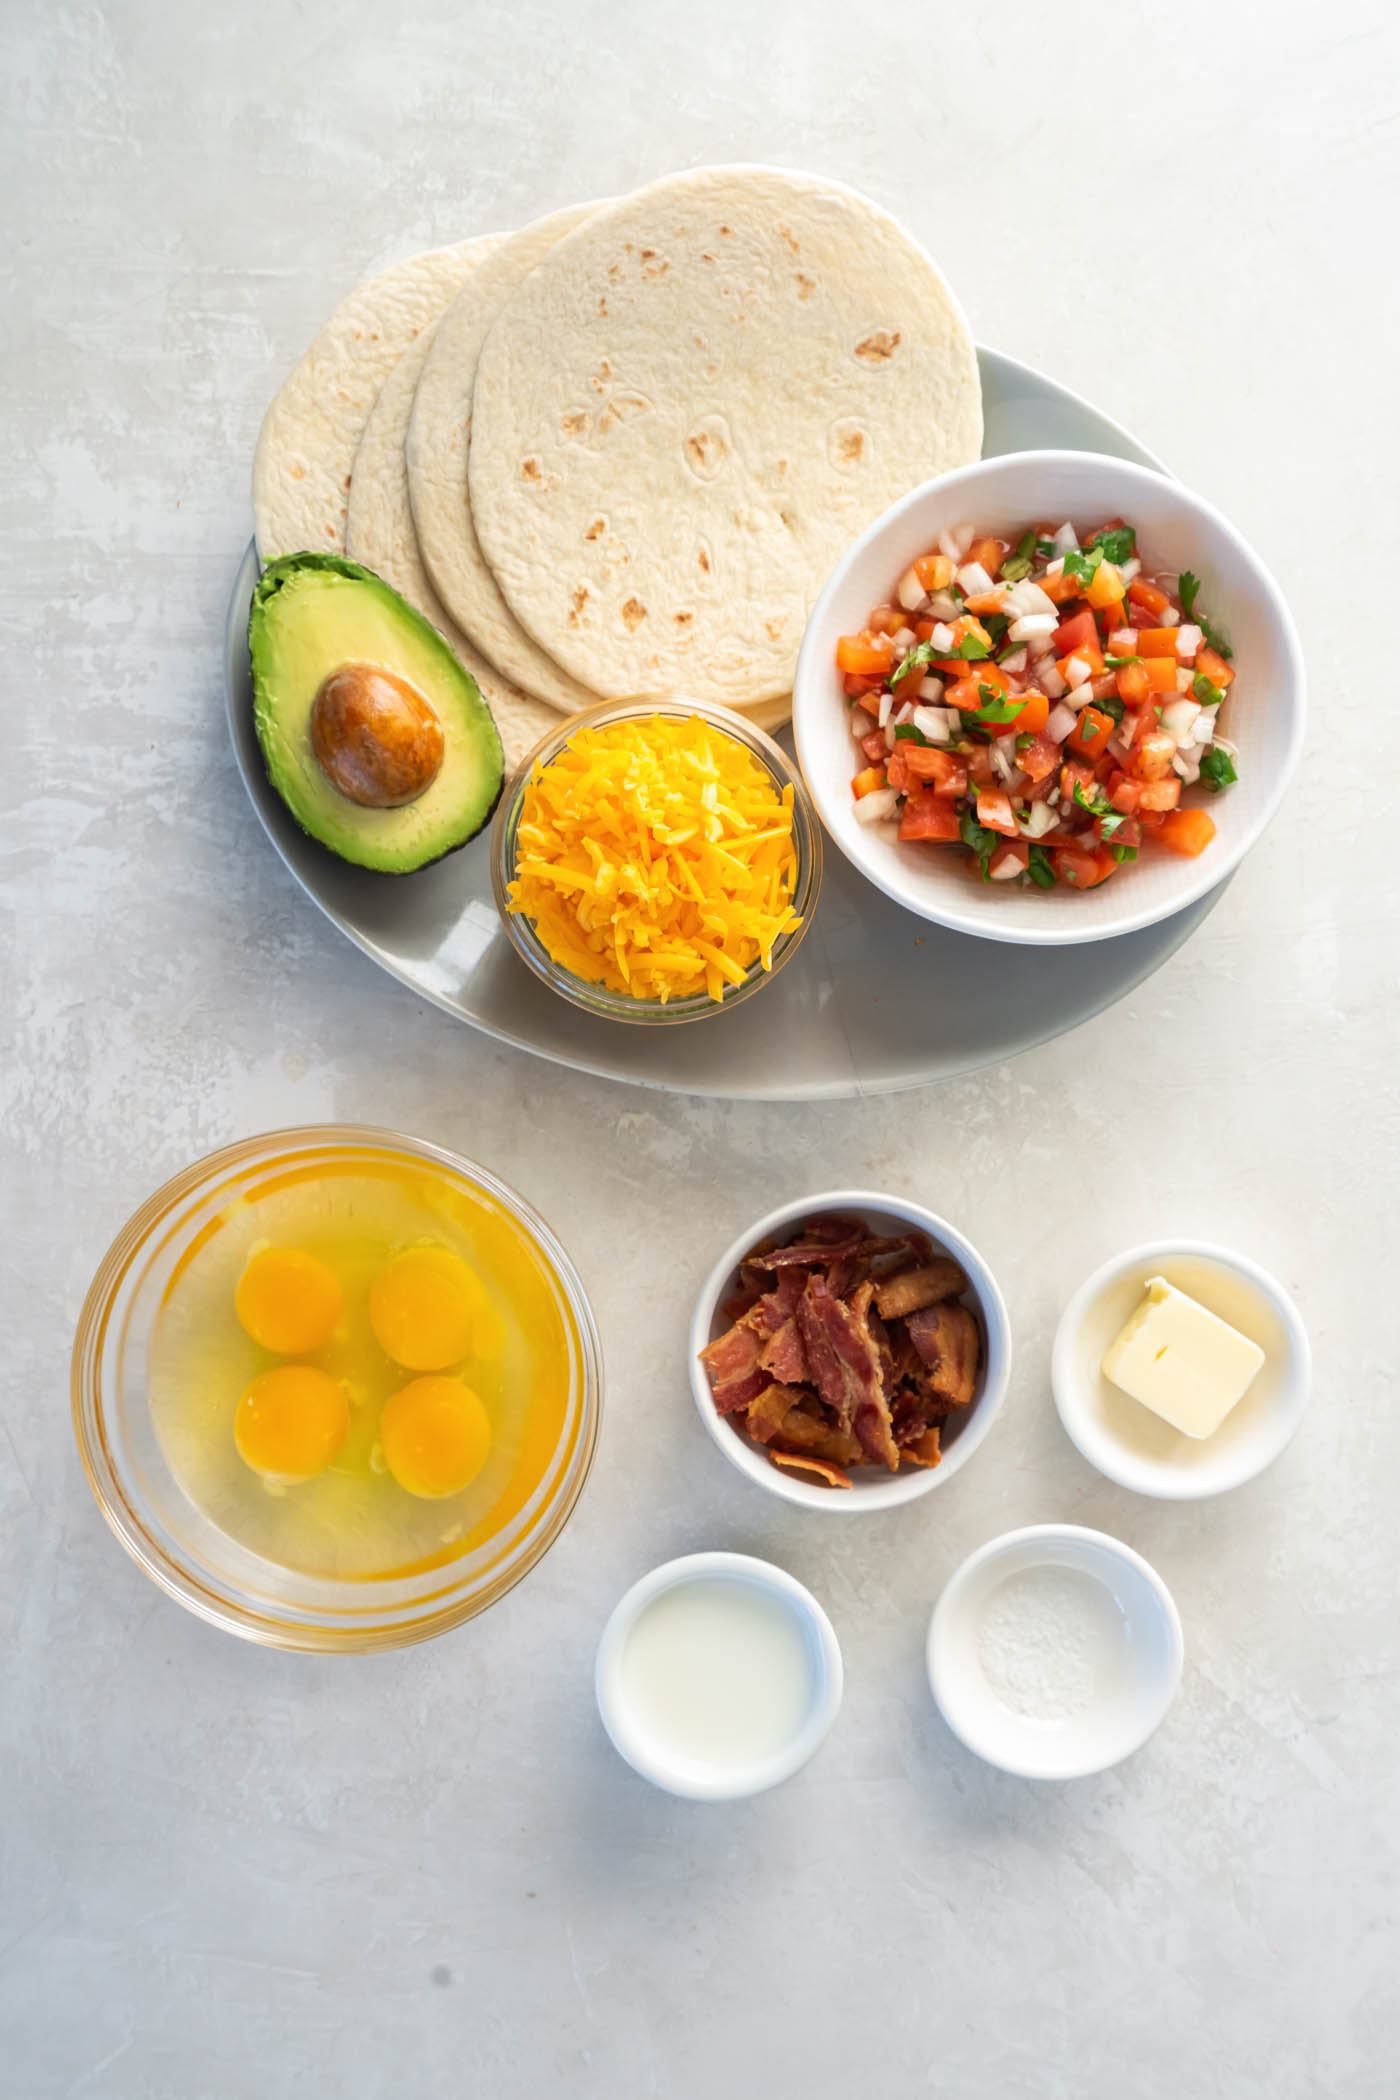 Ingredients for breakfast tacos recipe.